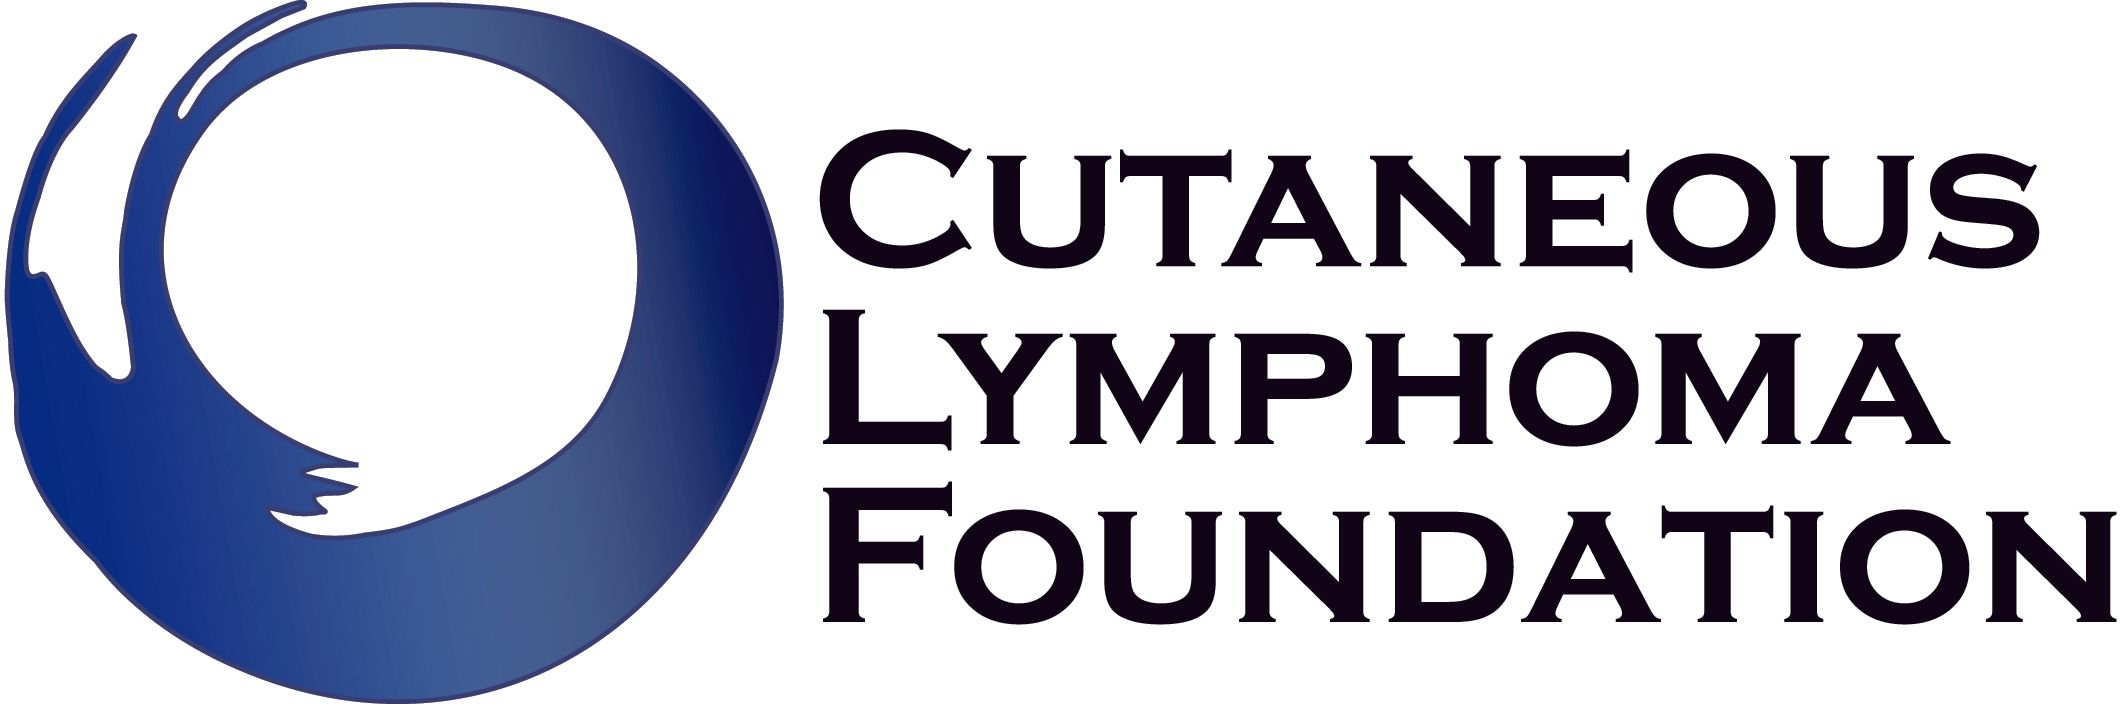 Advocacy Groups | <b>Cutaneous Lymphoma Foundation</b>